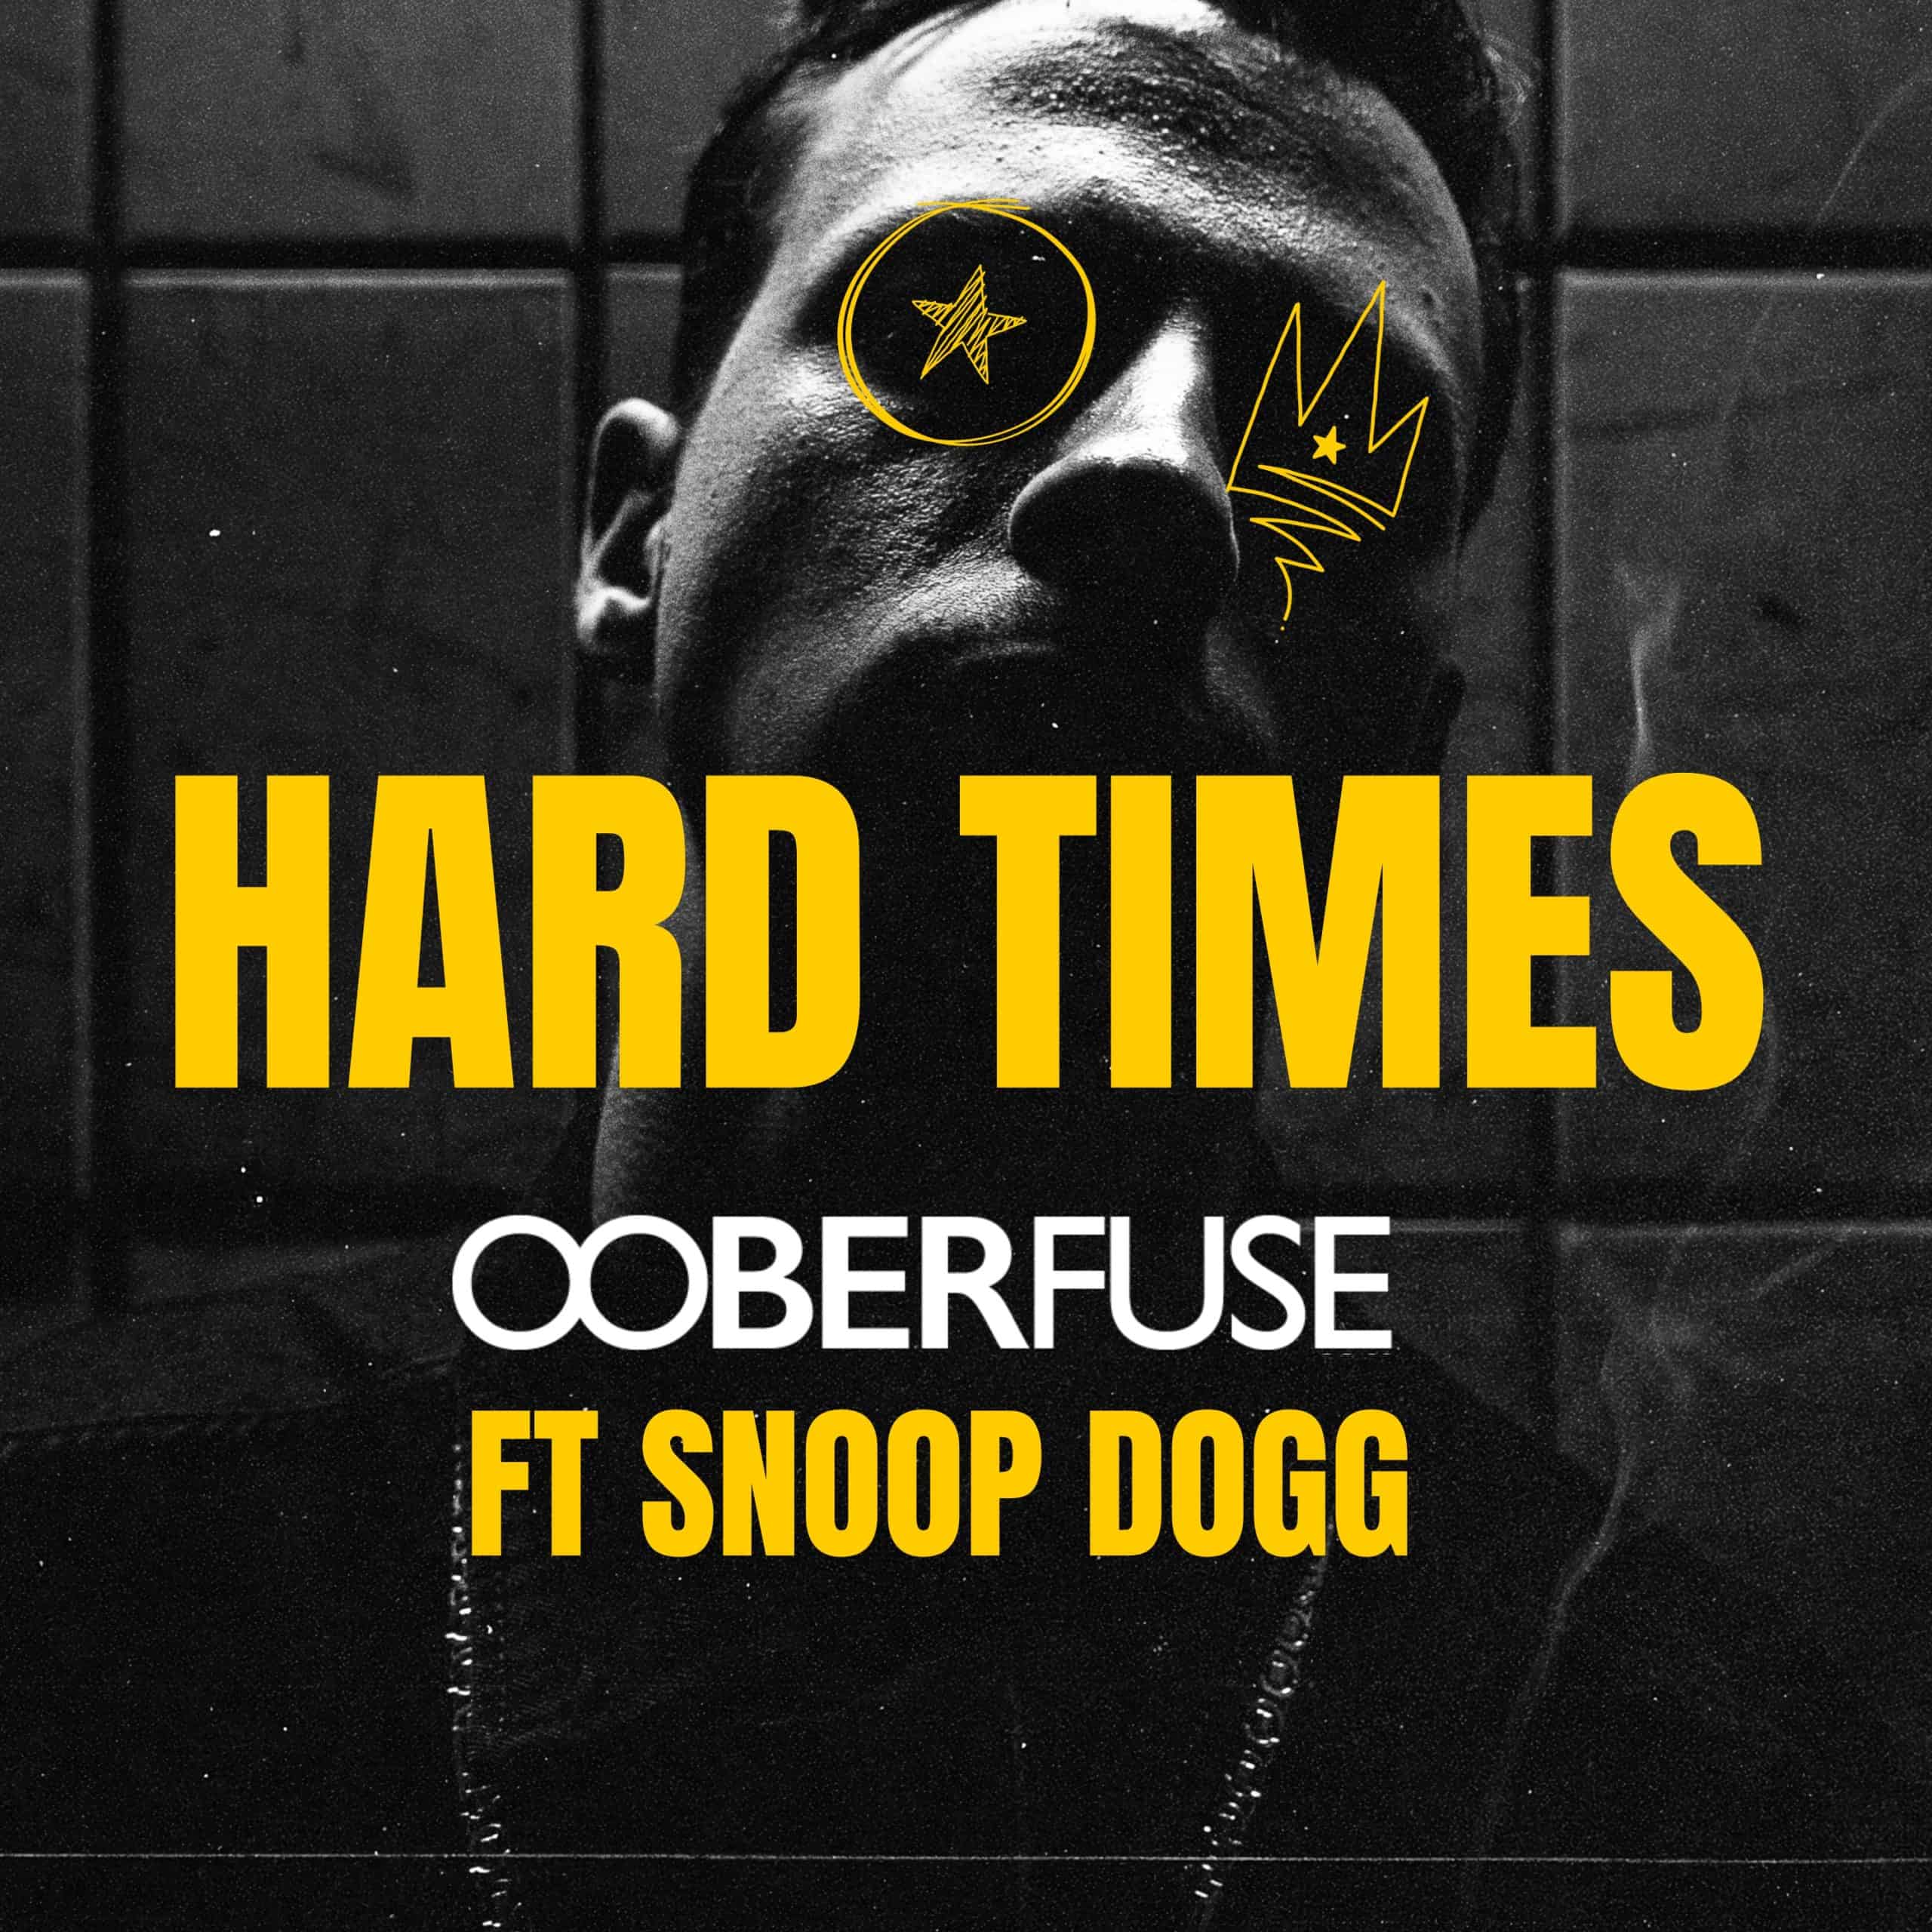 Hard Times - Ooberfuse ft Snoop Dogg